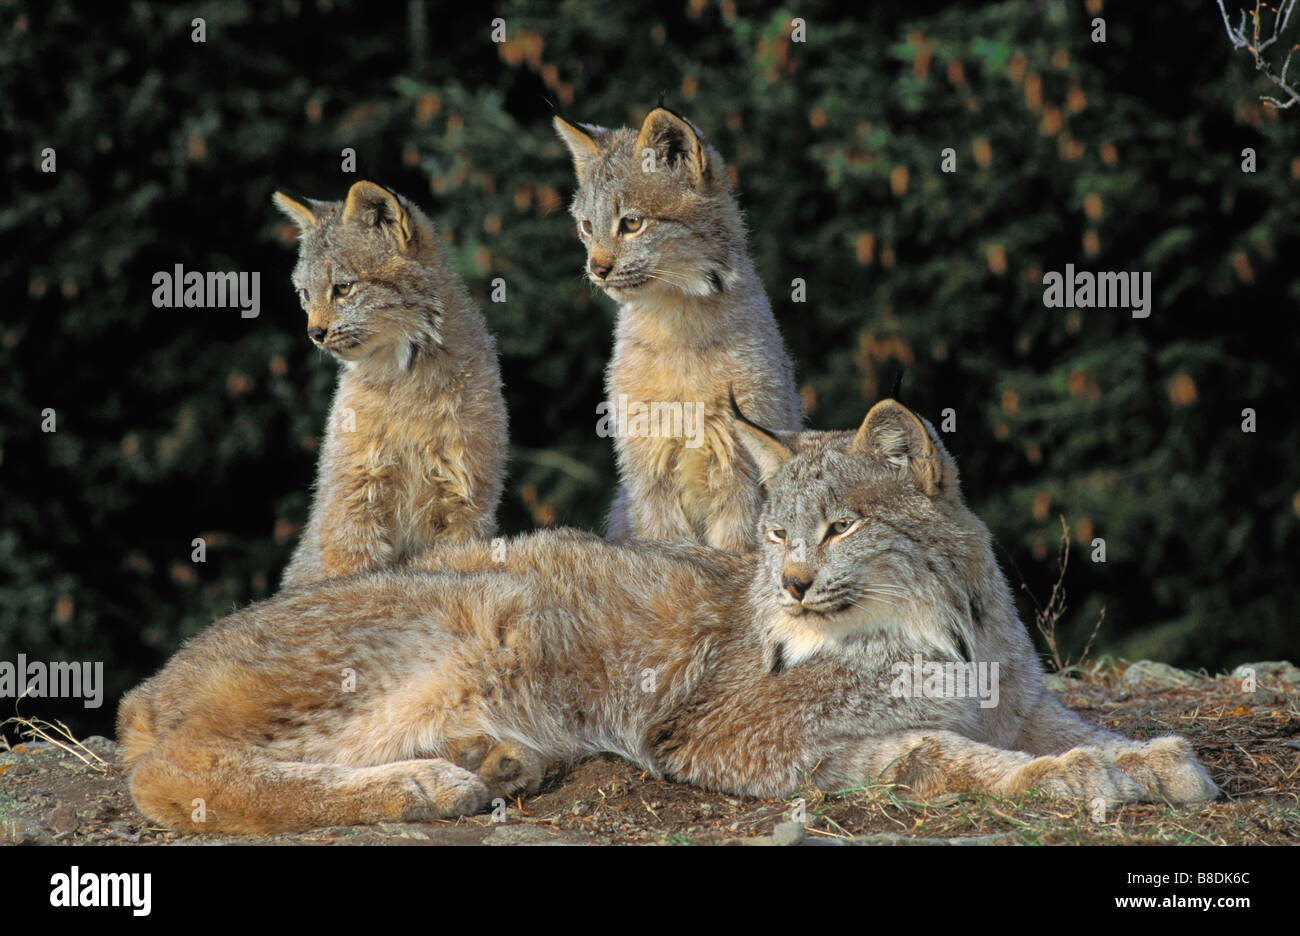 tk0246, Thomas Kitchin; Lynx kittens fir est  4 months old  Autumn  Rocky Mountains  North America  Felis lynx canadensis Stock Photo